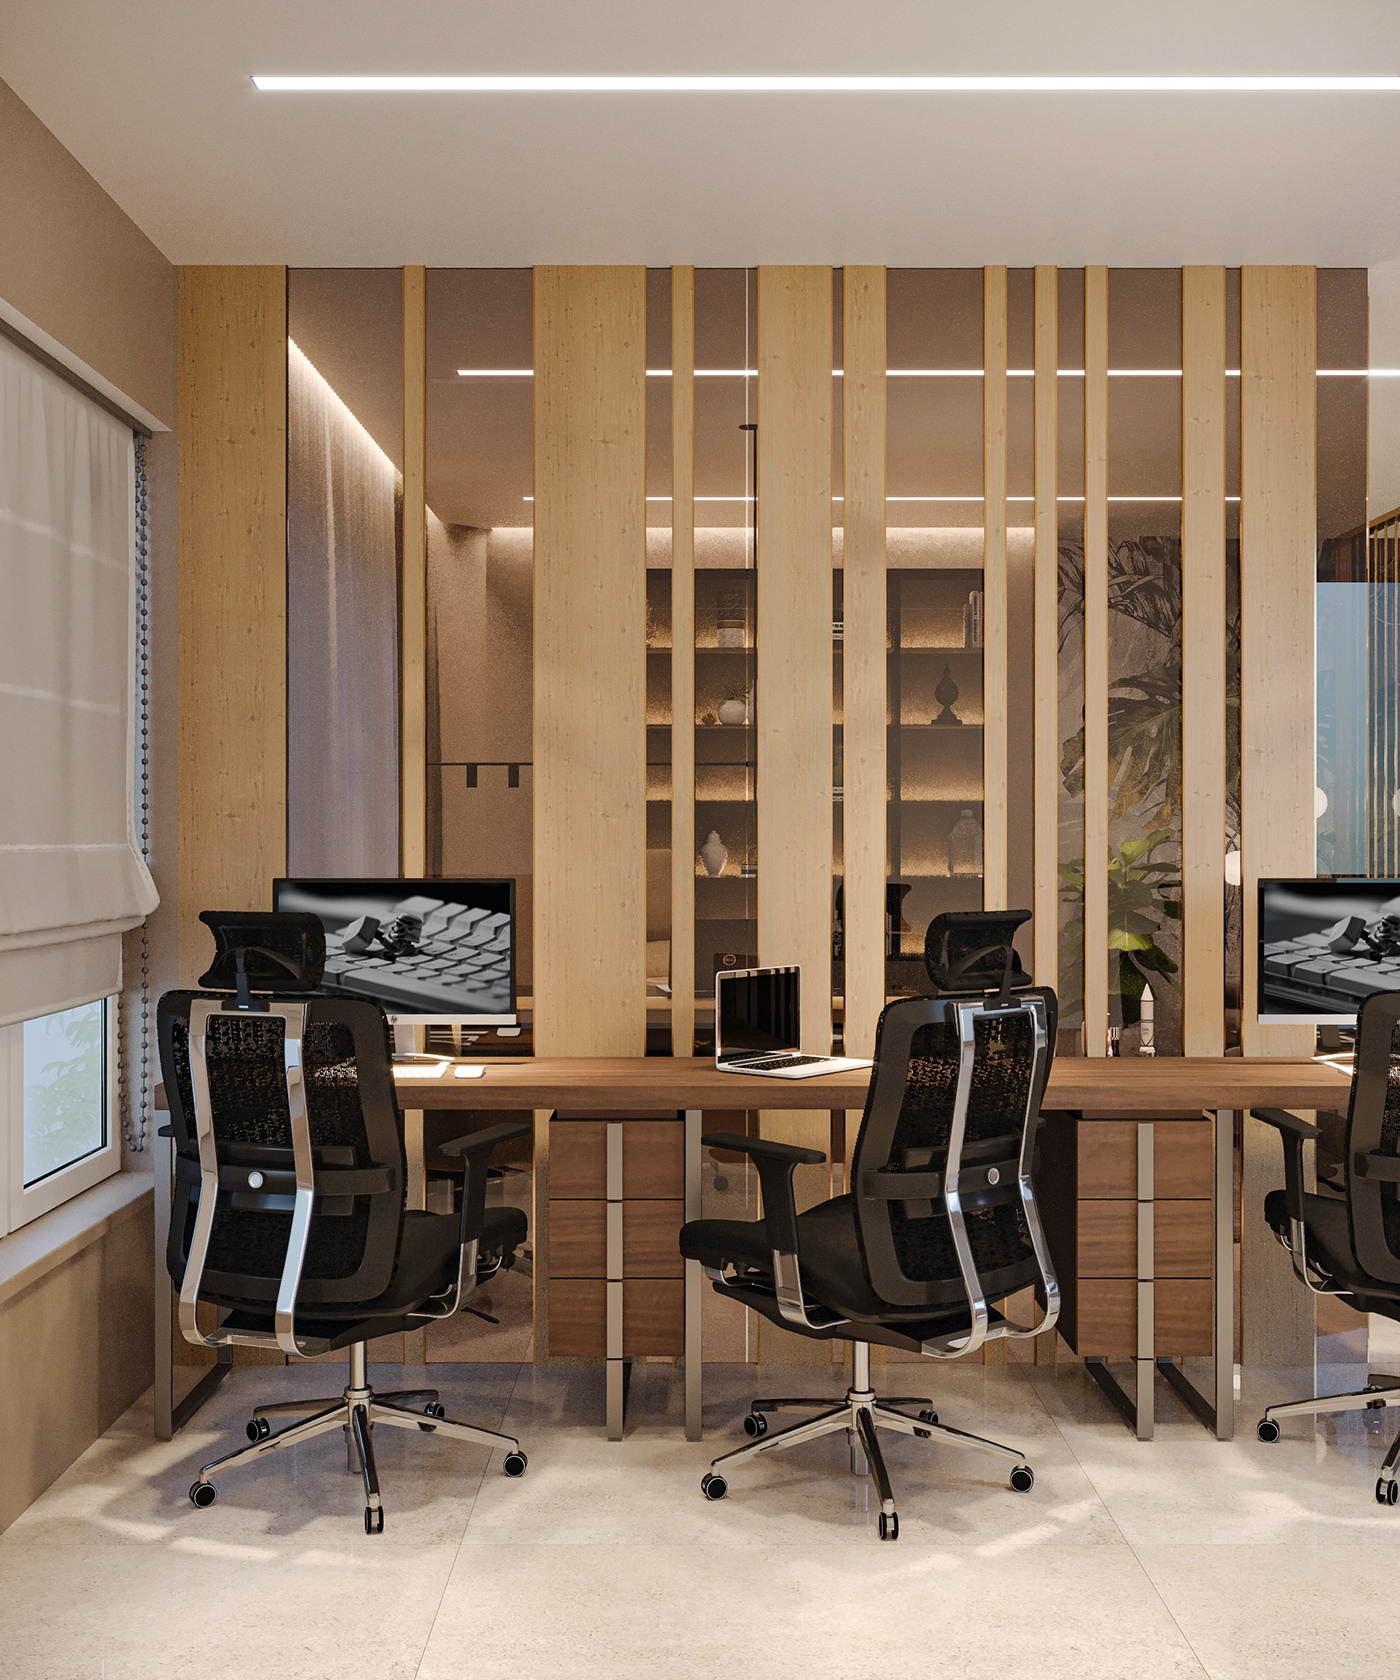 Office Office Design office furniture Interior architecture Render interior design  corona 3ds max office design ideas